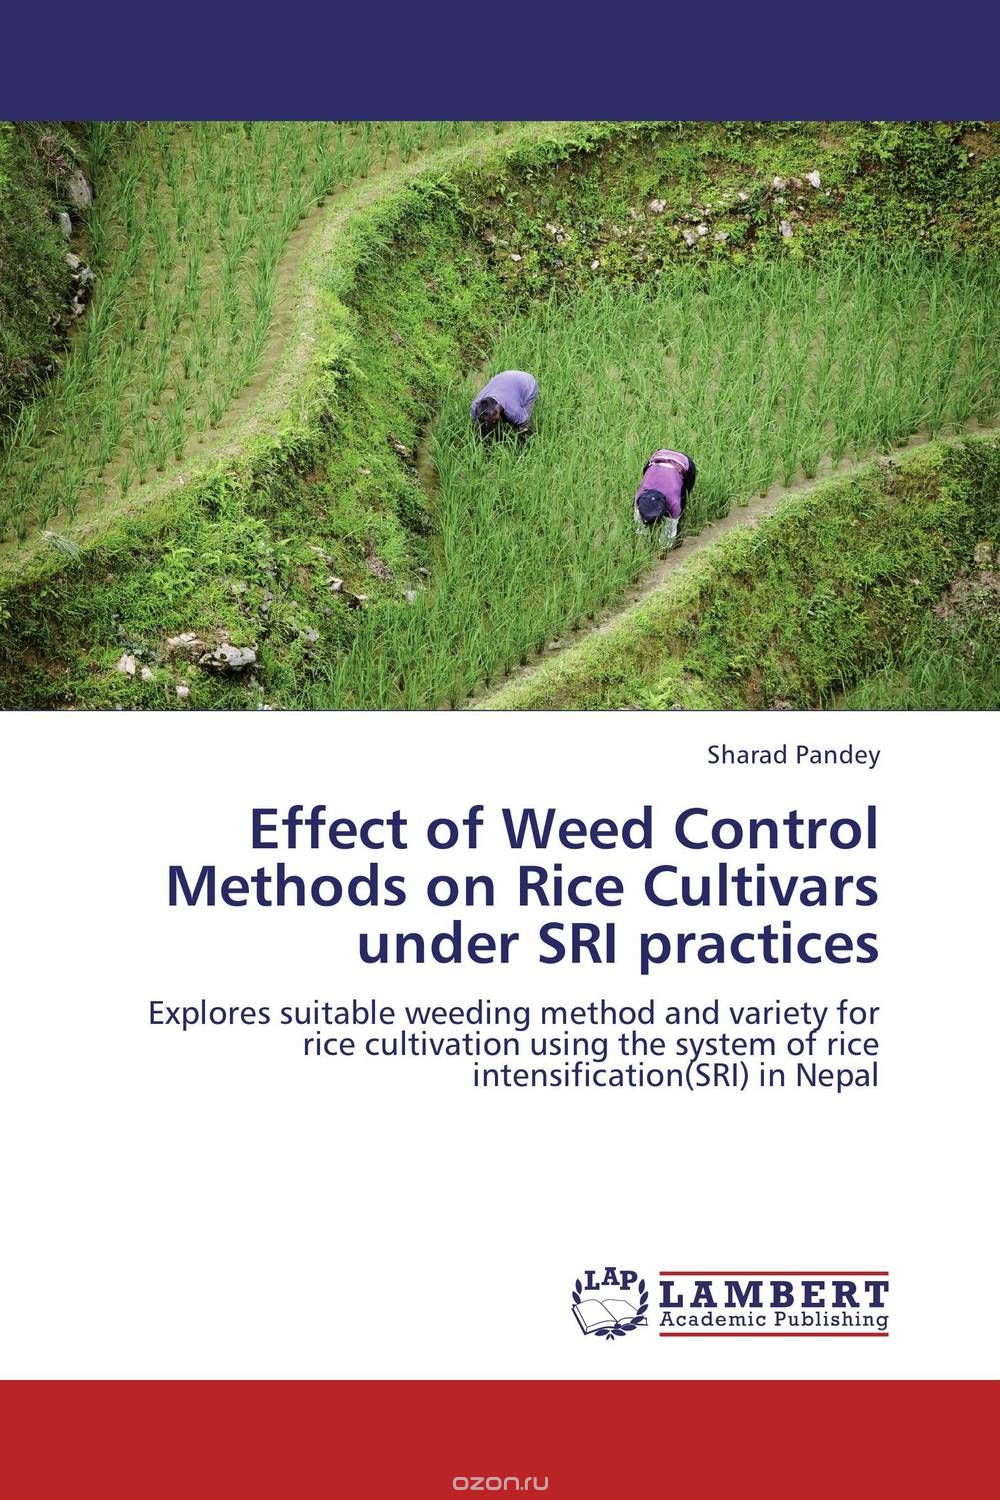 Скачать книгу "Effect of Weed Control Methods on Rice Cultivars under SRI practices"